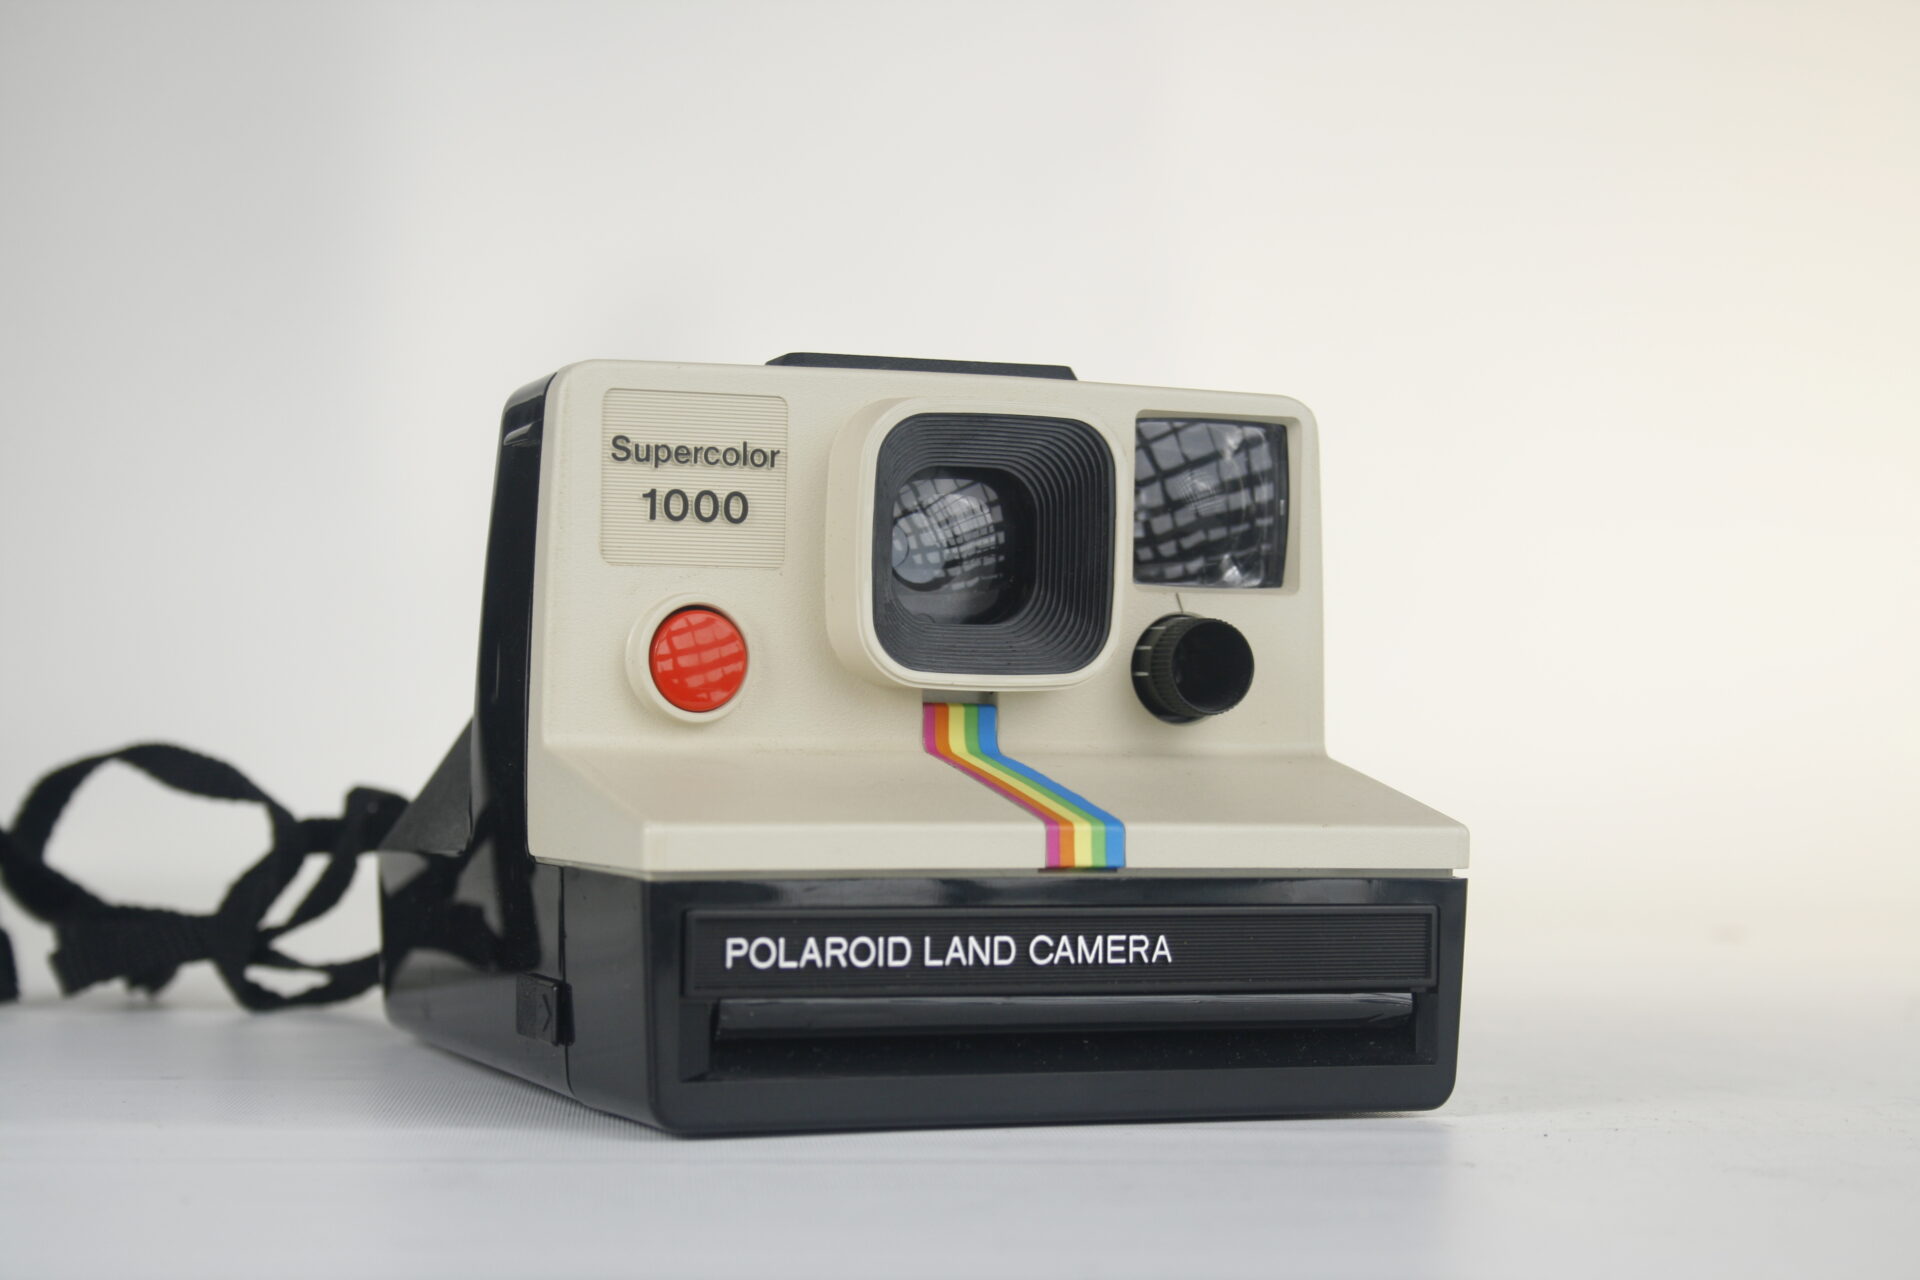 Polaroid Land Camera Supercolor 1000. SX-70 integraal film. 1977-1985. USA